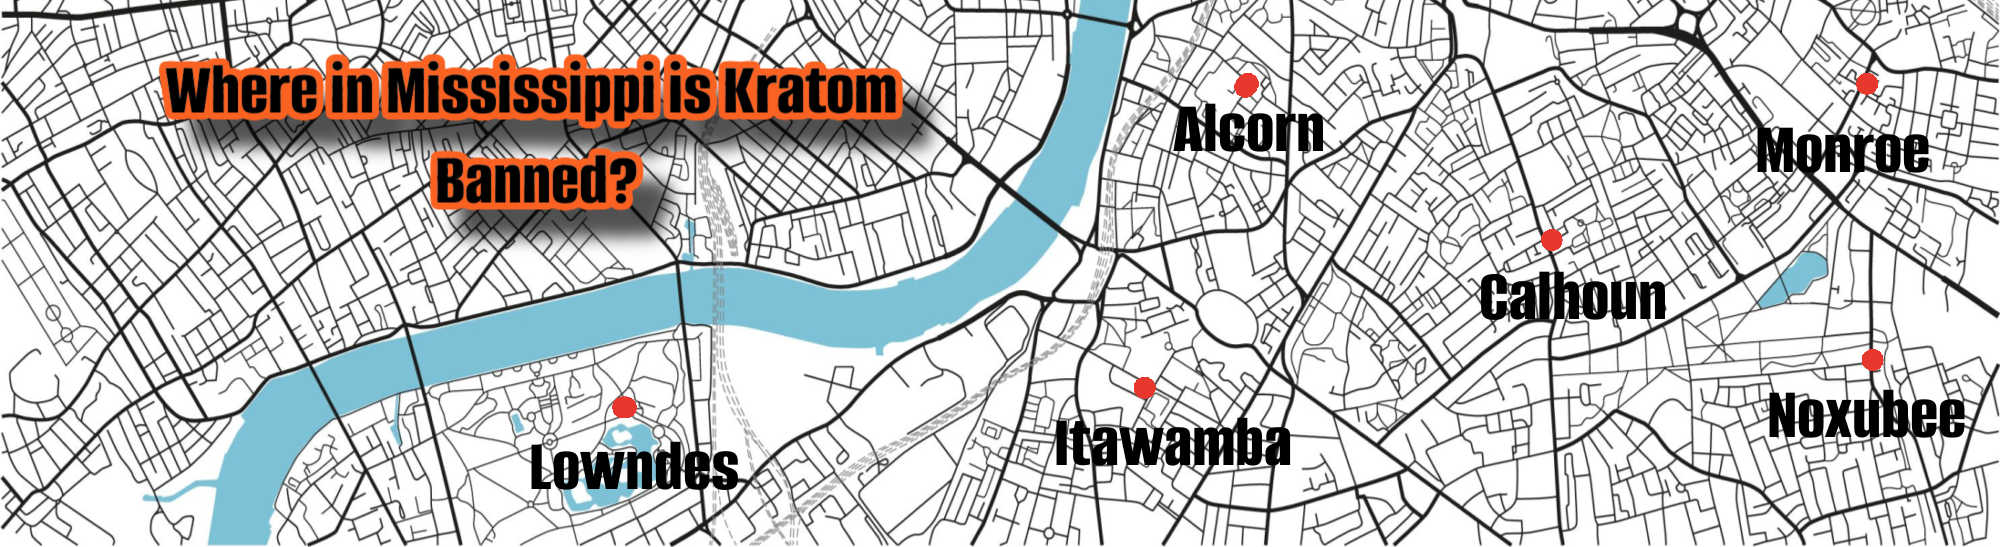 image of where kratom banned in mississippi